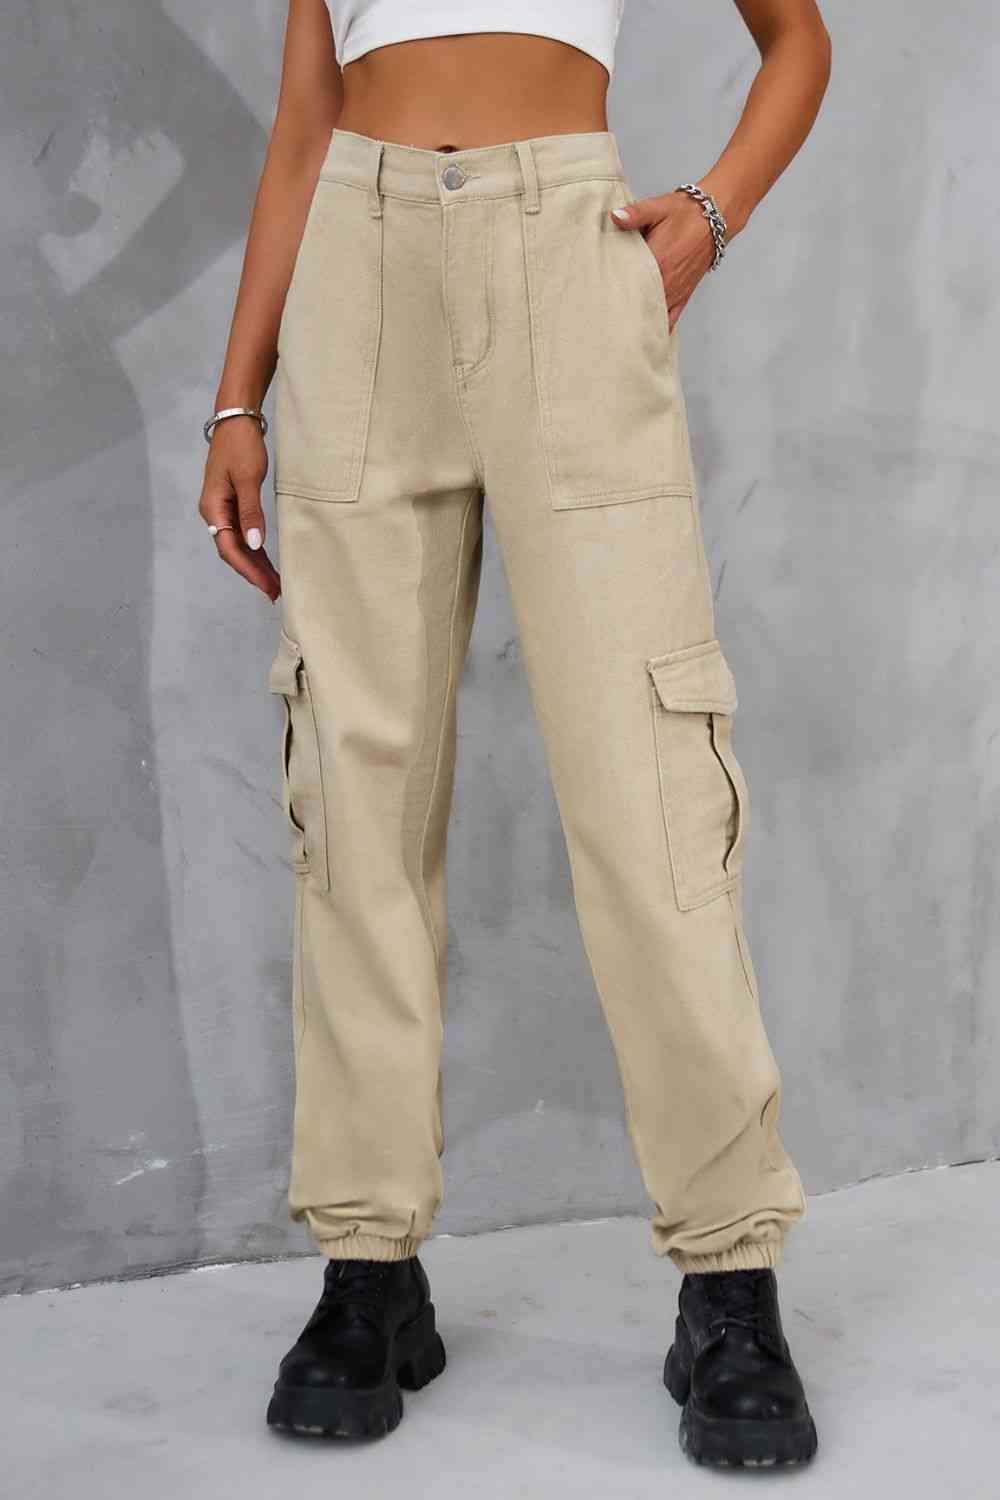 Dark Gray Buttoned High Waist Jeans with Pockets Denim